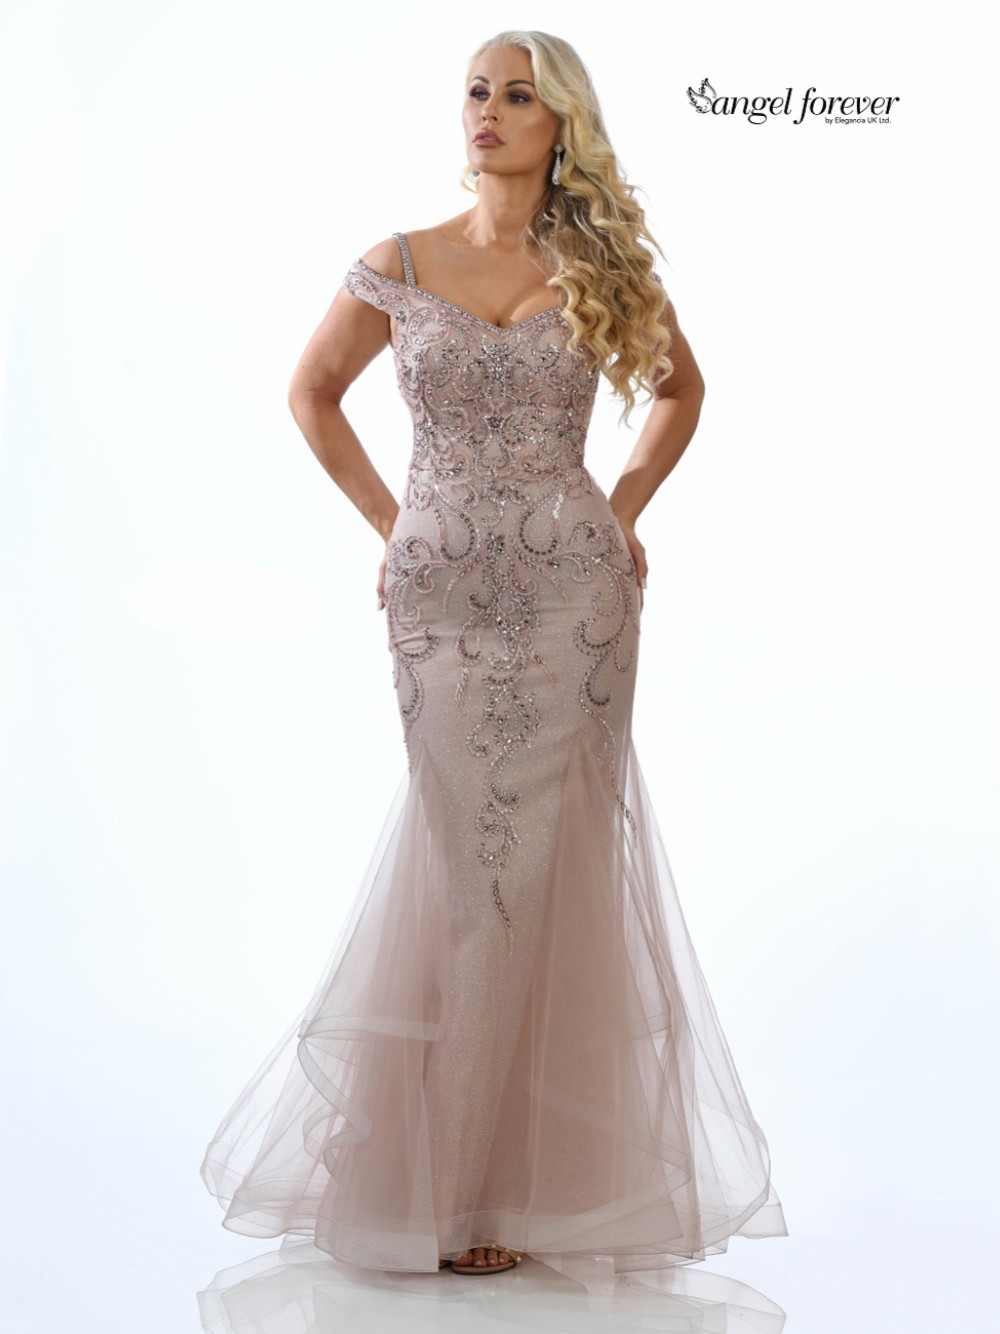 Angel Forever Embellished Shimmer Tulle Fishtail Prom Dress (Rose Gold)